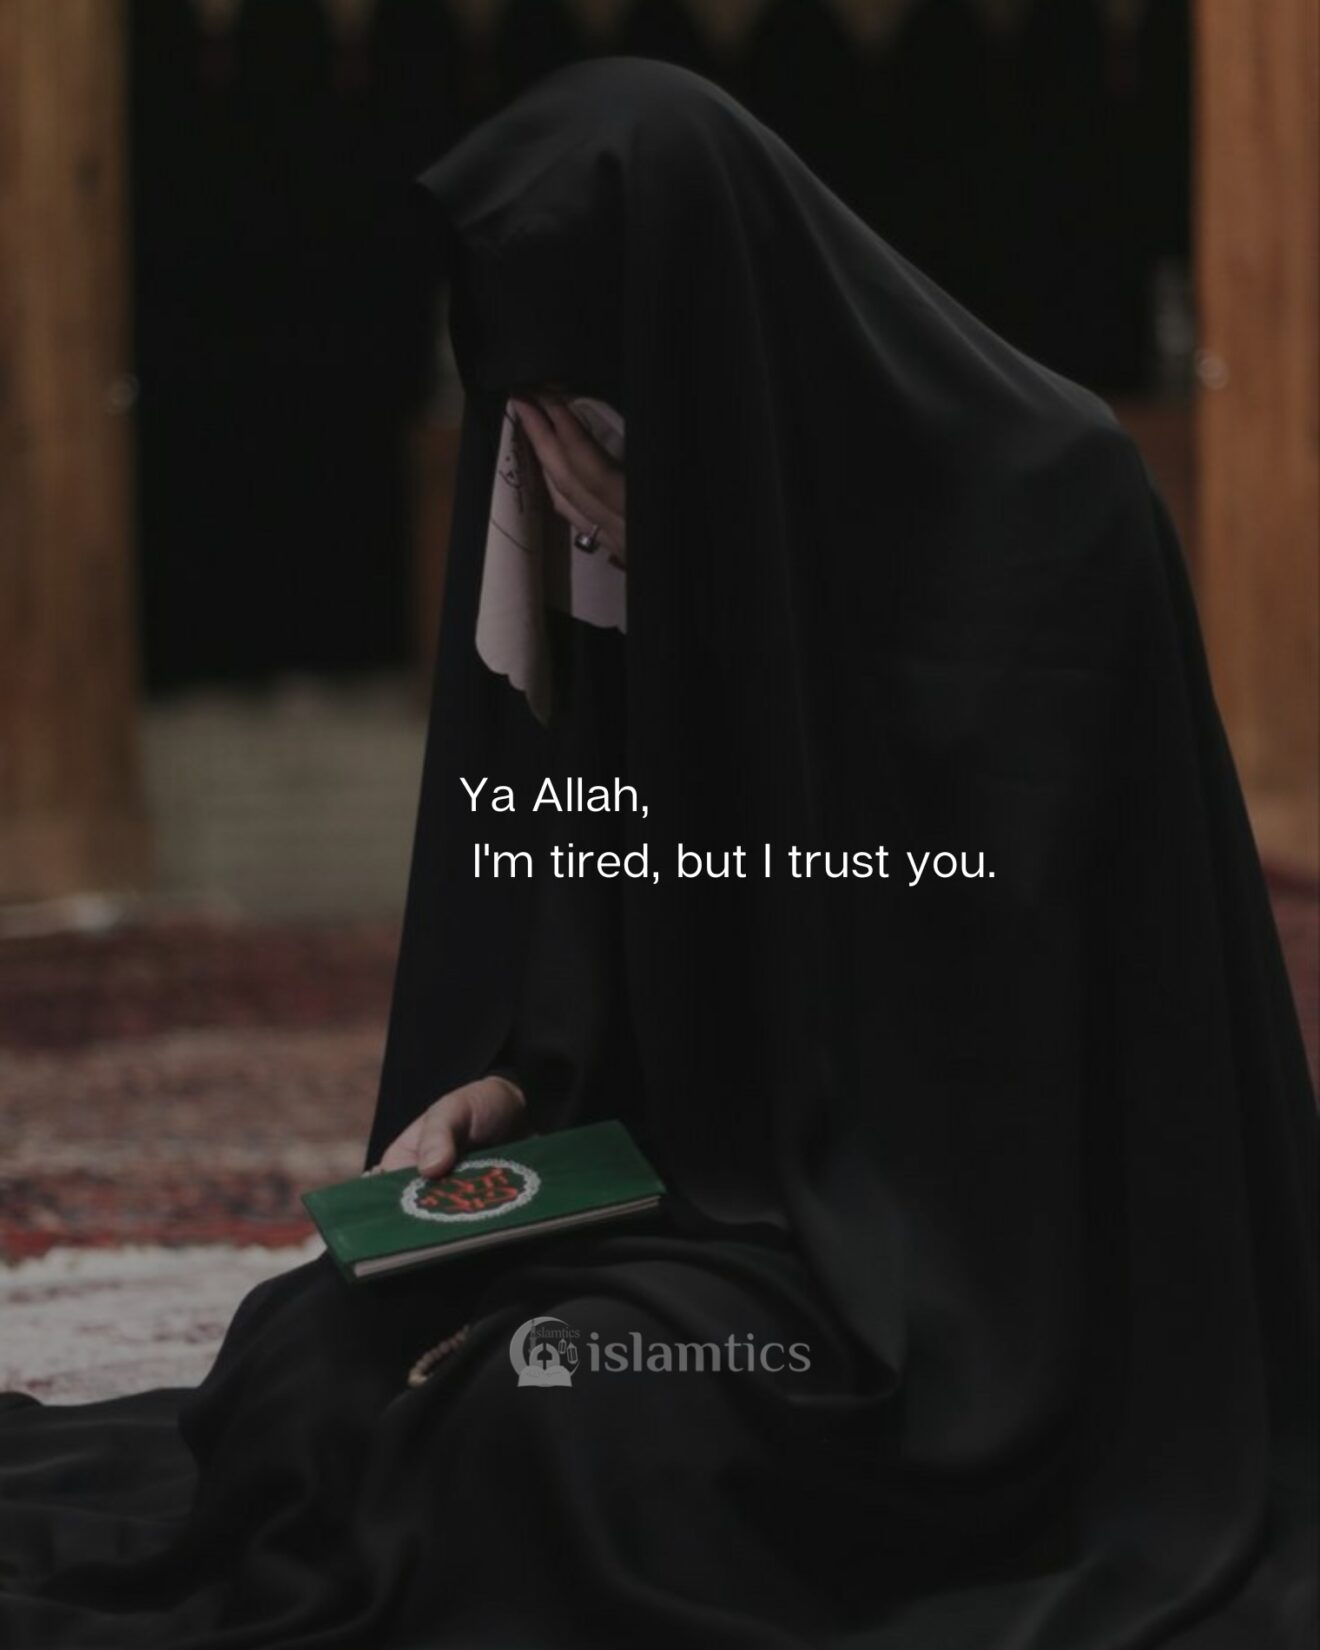  Ya Allah, I’m tired, but I trust you.